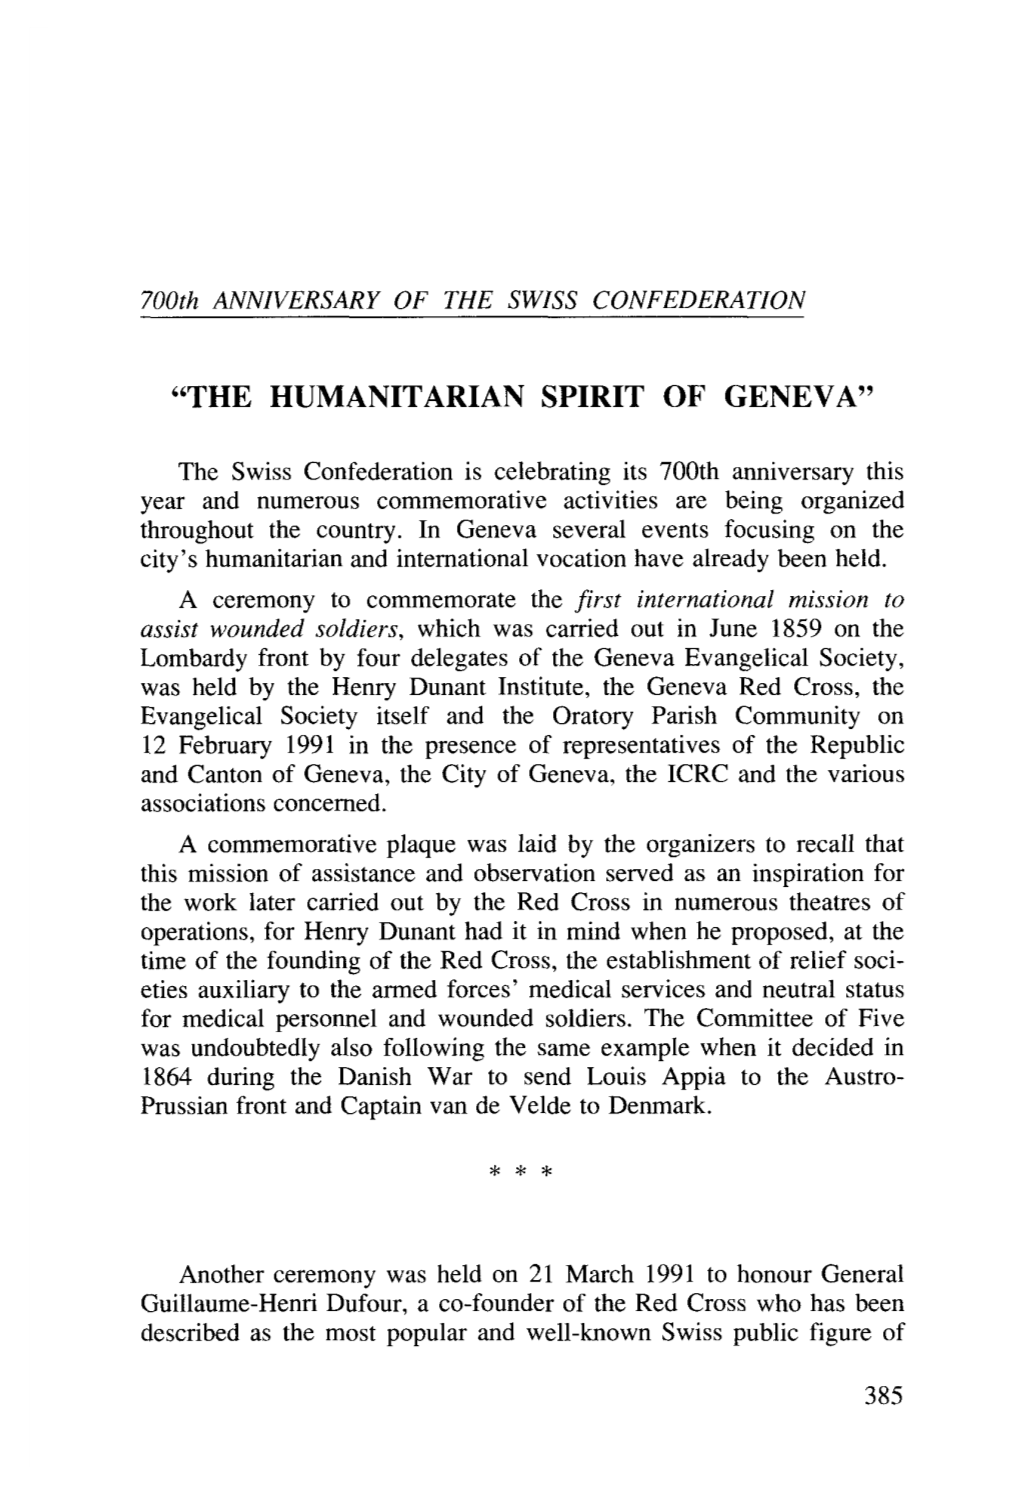 "The Humanitarian Spirit of Geneva"